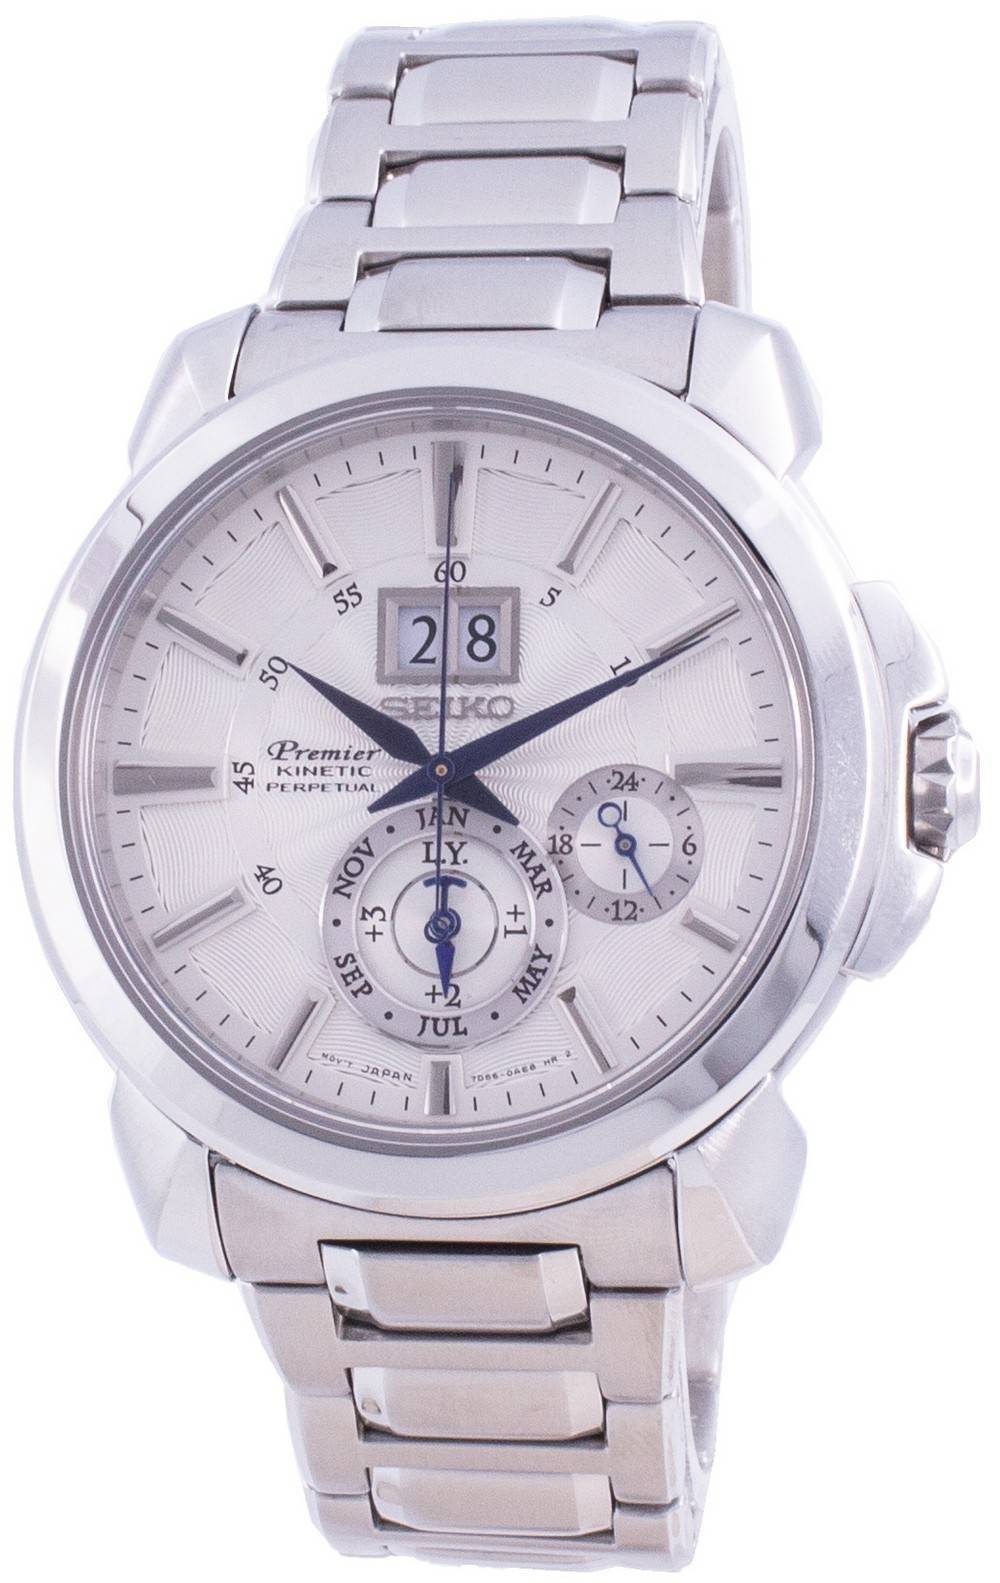 Seiko Perpetual Calendar Watch - Premier, Titanium, Arctura, Kinetic watches